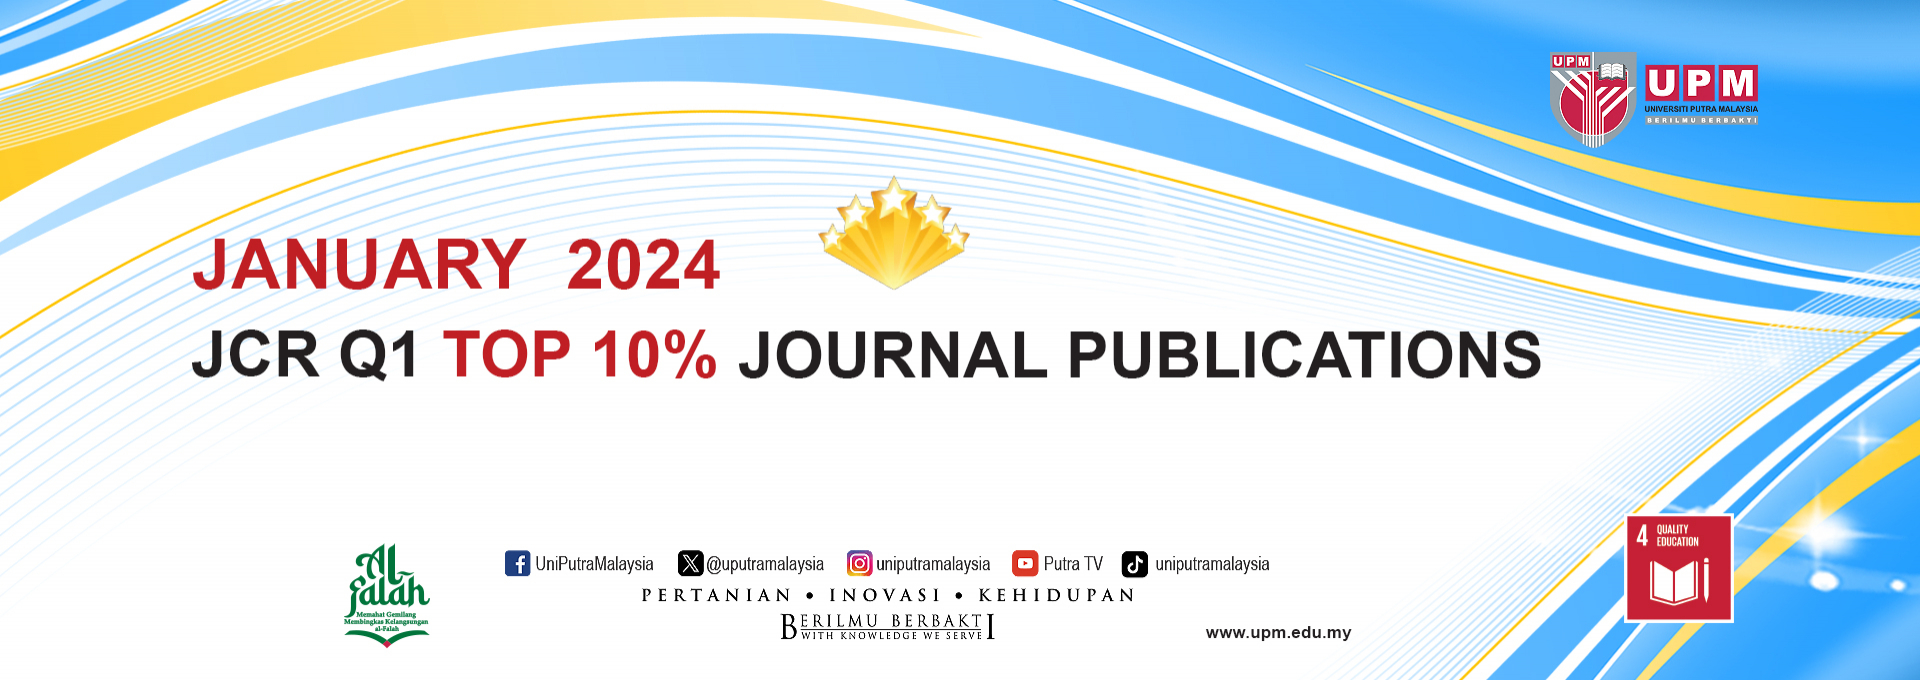 JANUARY 2024: LIST OF HIGH IMPACT PUBLICATION